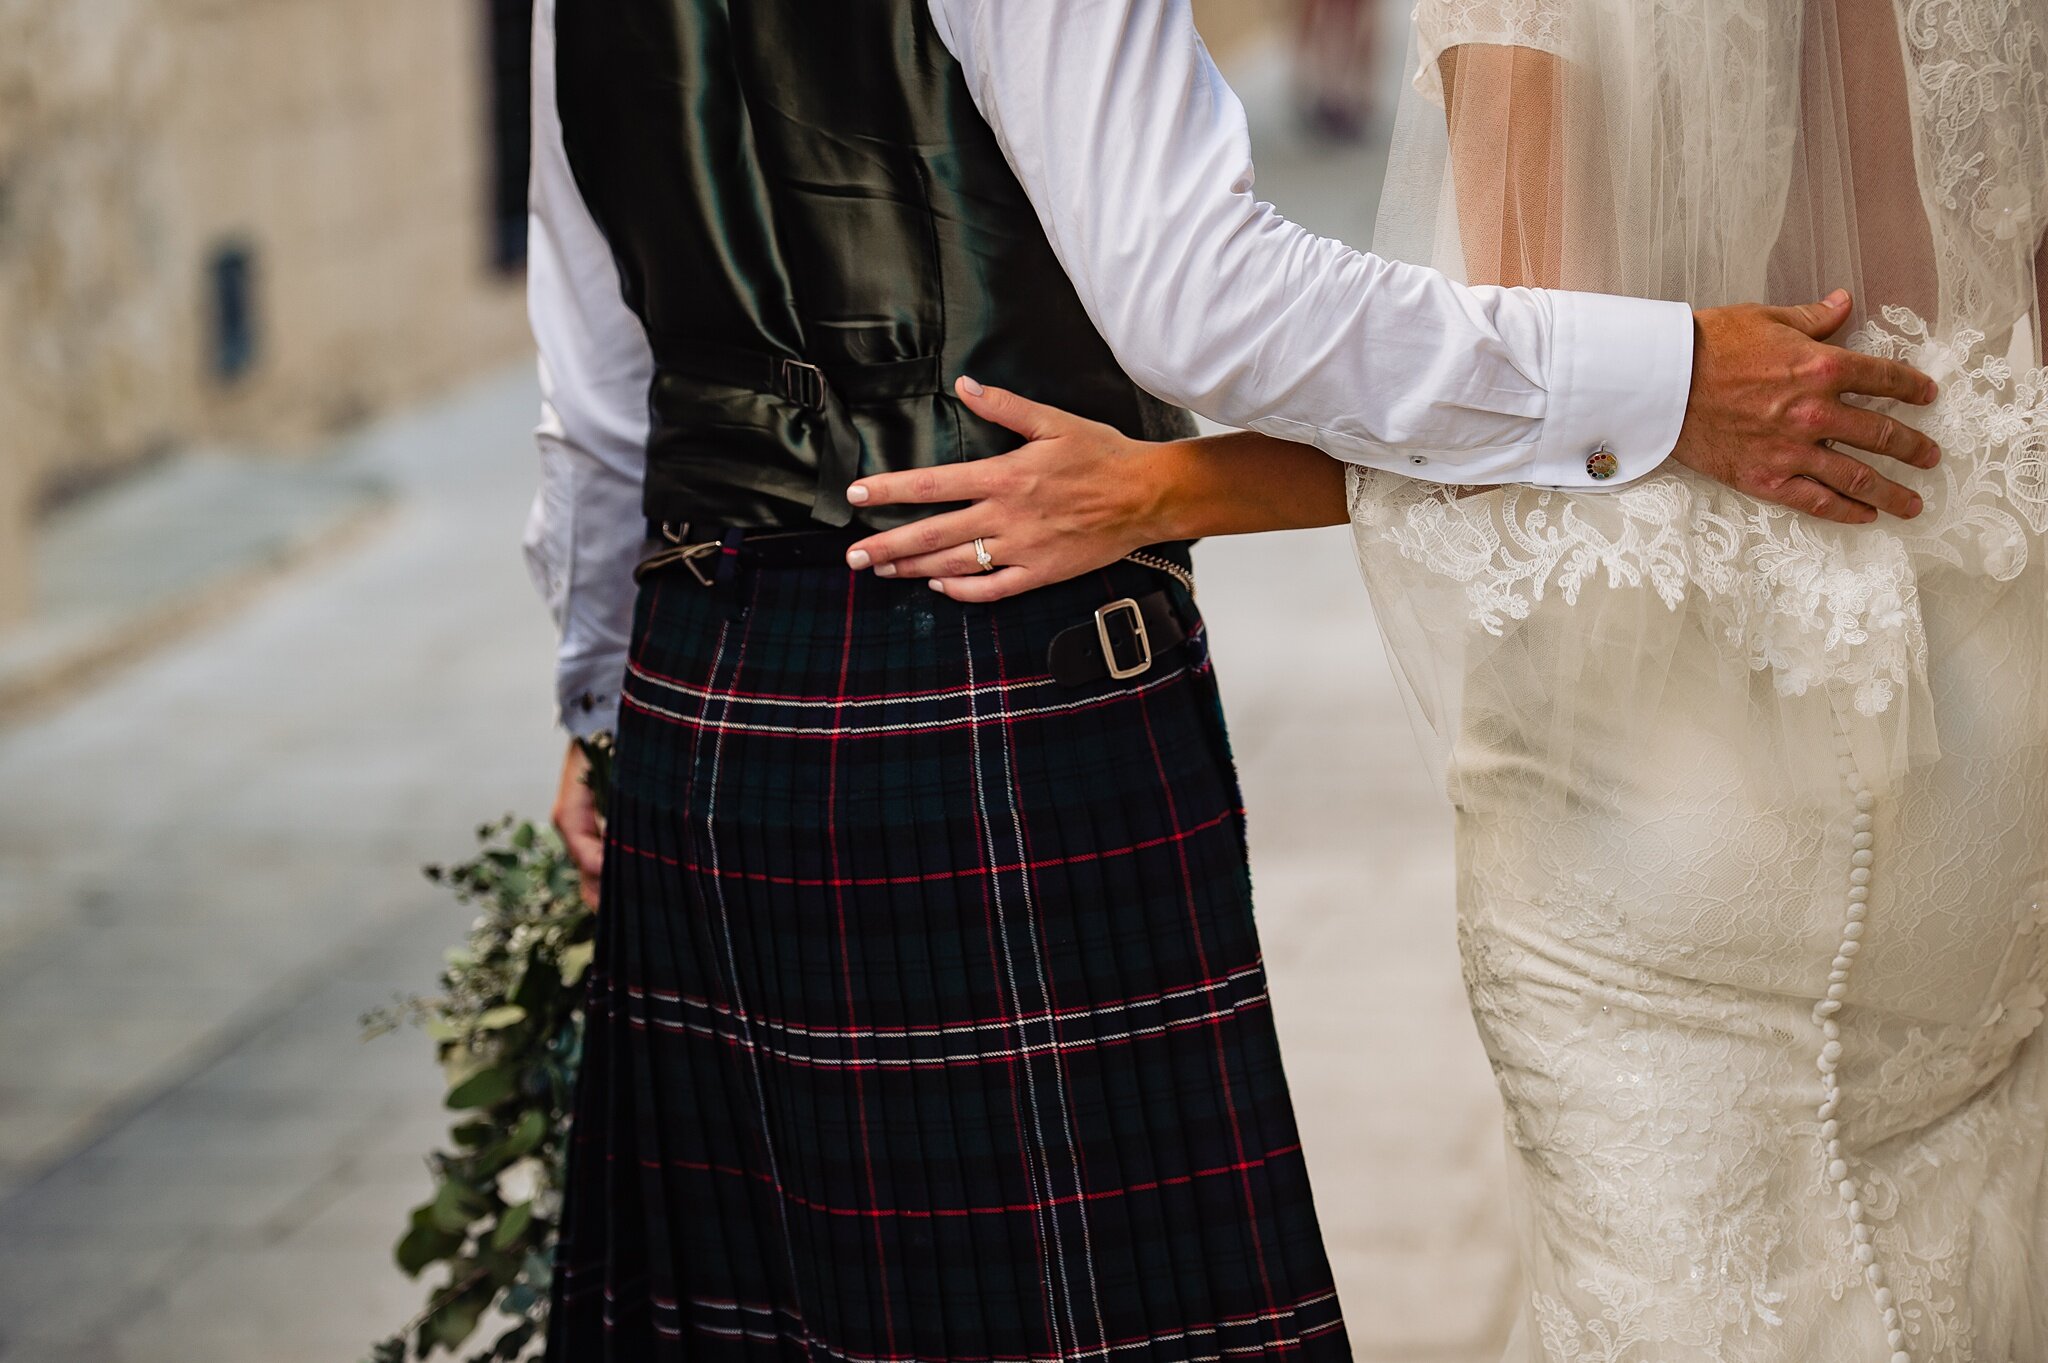 Bride &amp; Groom Photoshoot in Mdina - Wedding Photography Malta - Shane P. Watts Photography